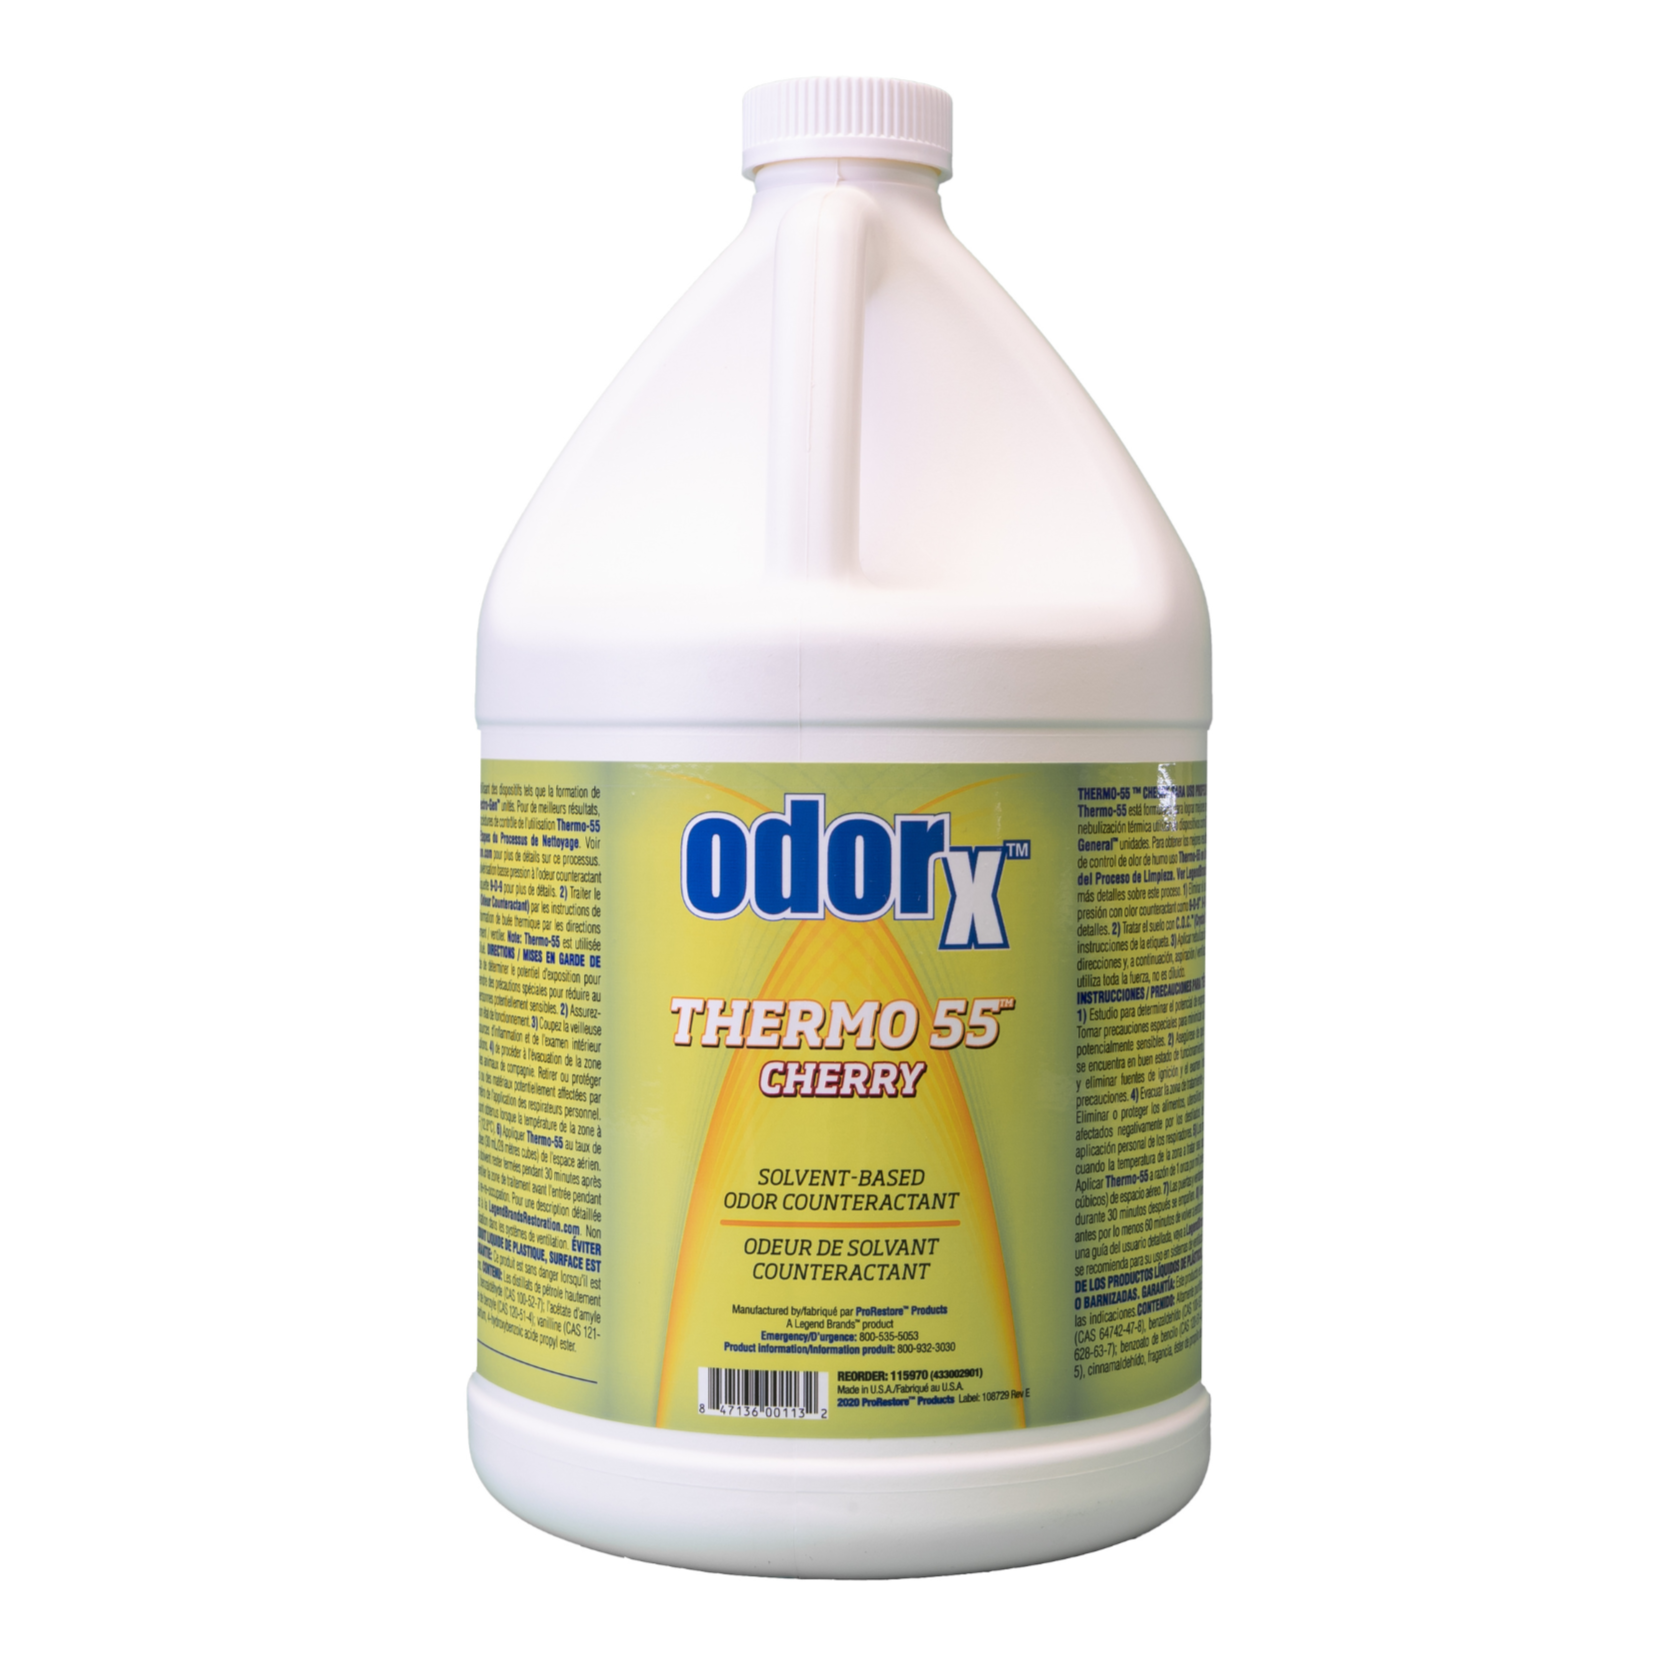 odeur solvant counteractant thermo55 cerise odorx miranet